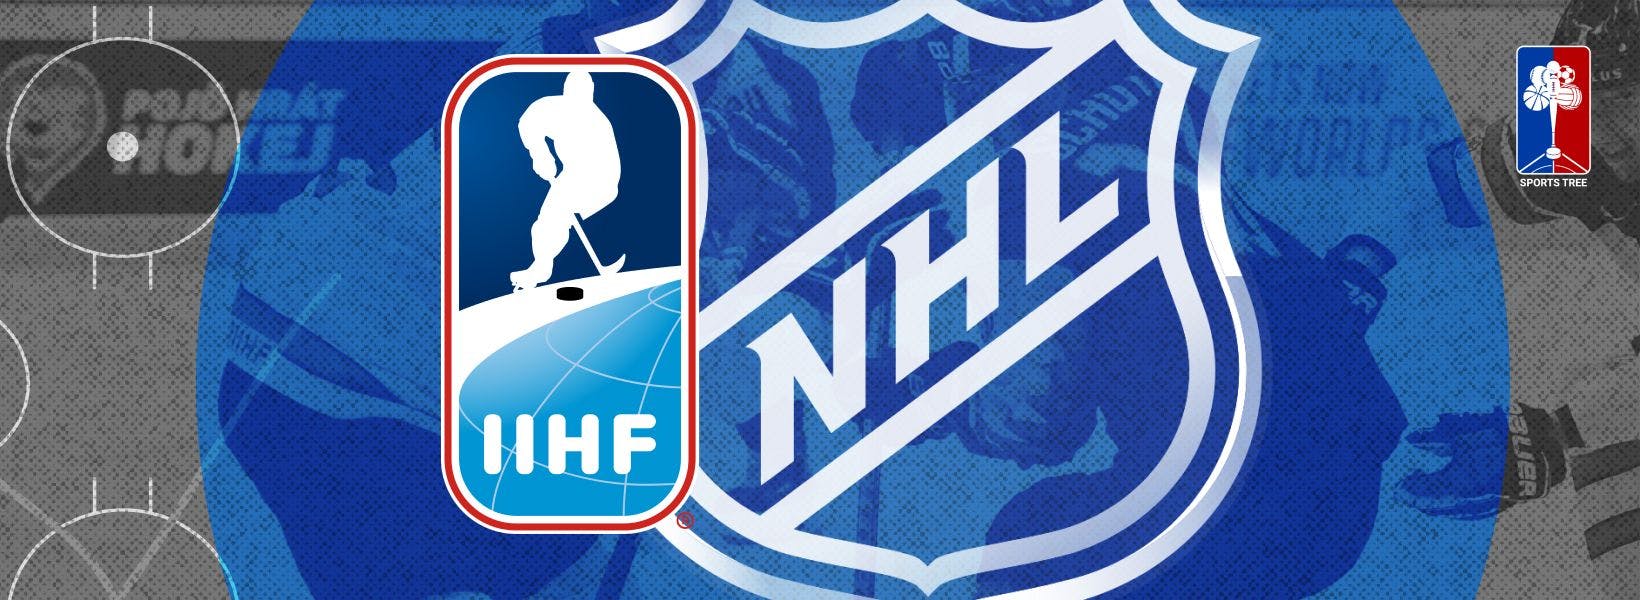 International Ice Hockey Federation and the National Hockey League logos